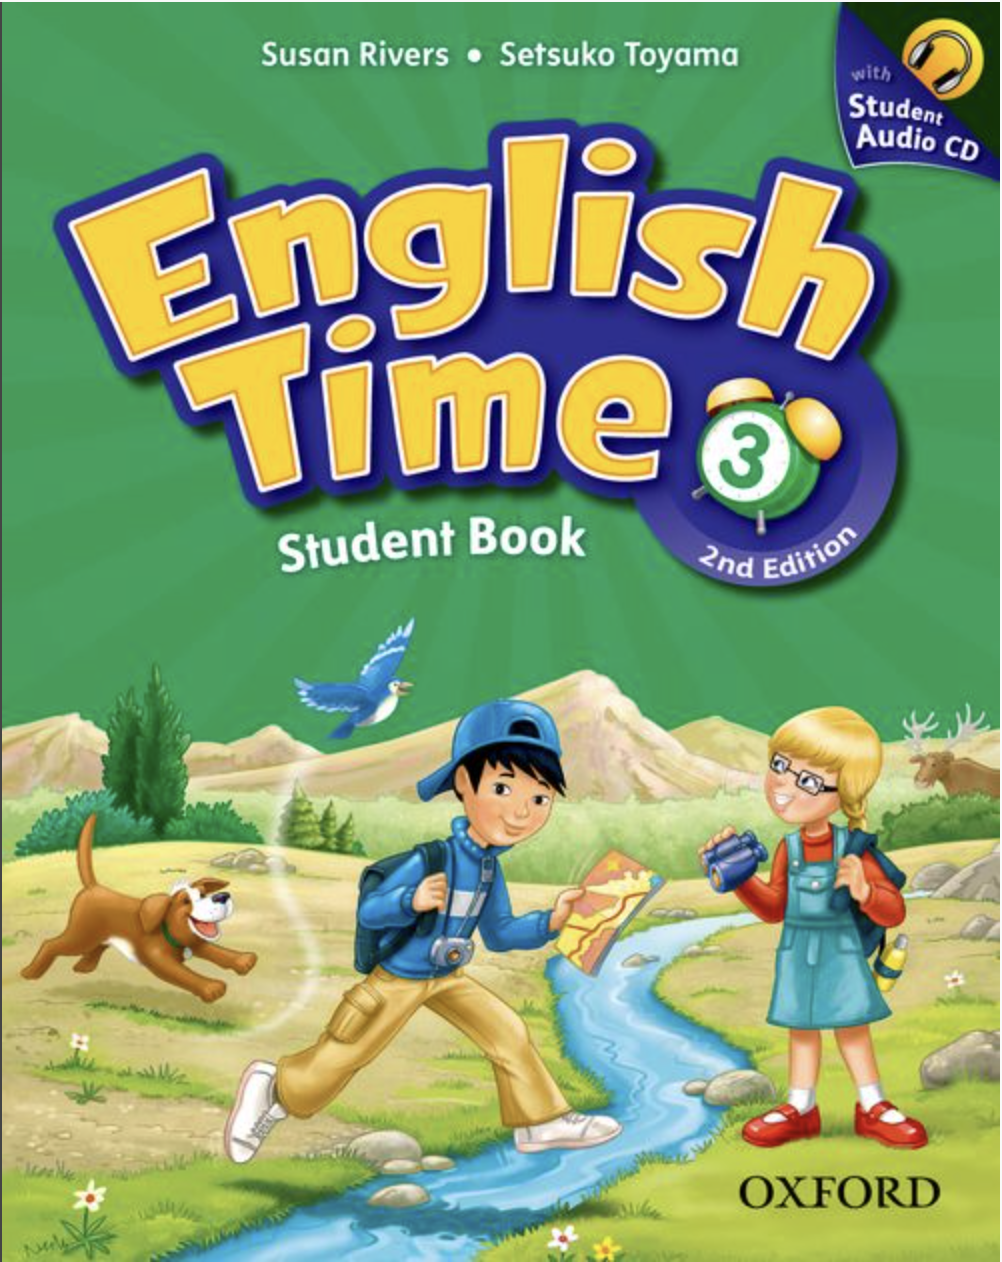 Word book английский. Английский pupils book Oxford. Английский для детей книга. Учебники по английскому языку для детей Oxford. English time Oxford.